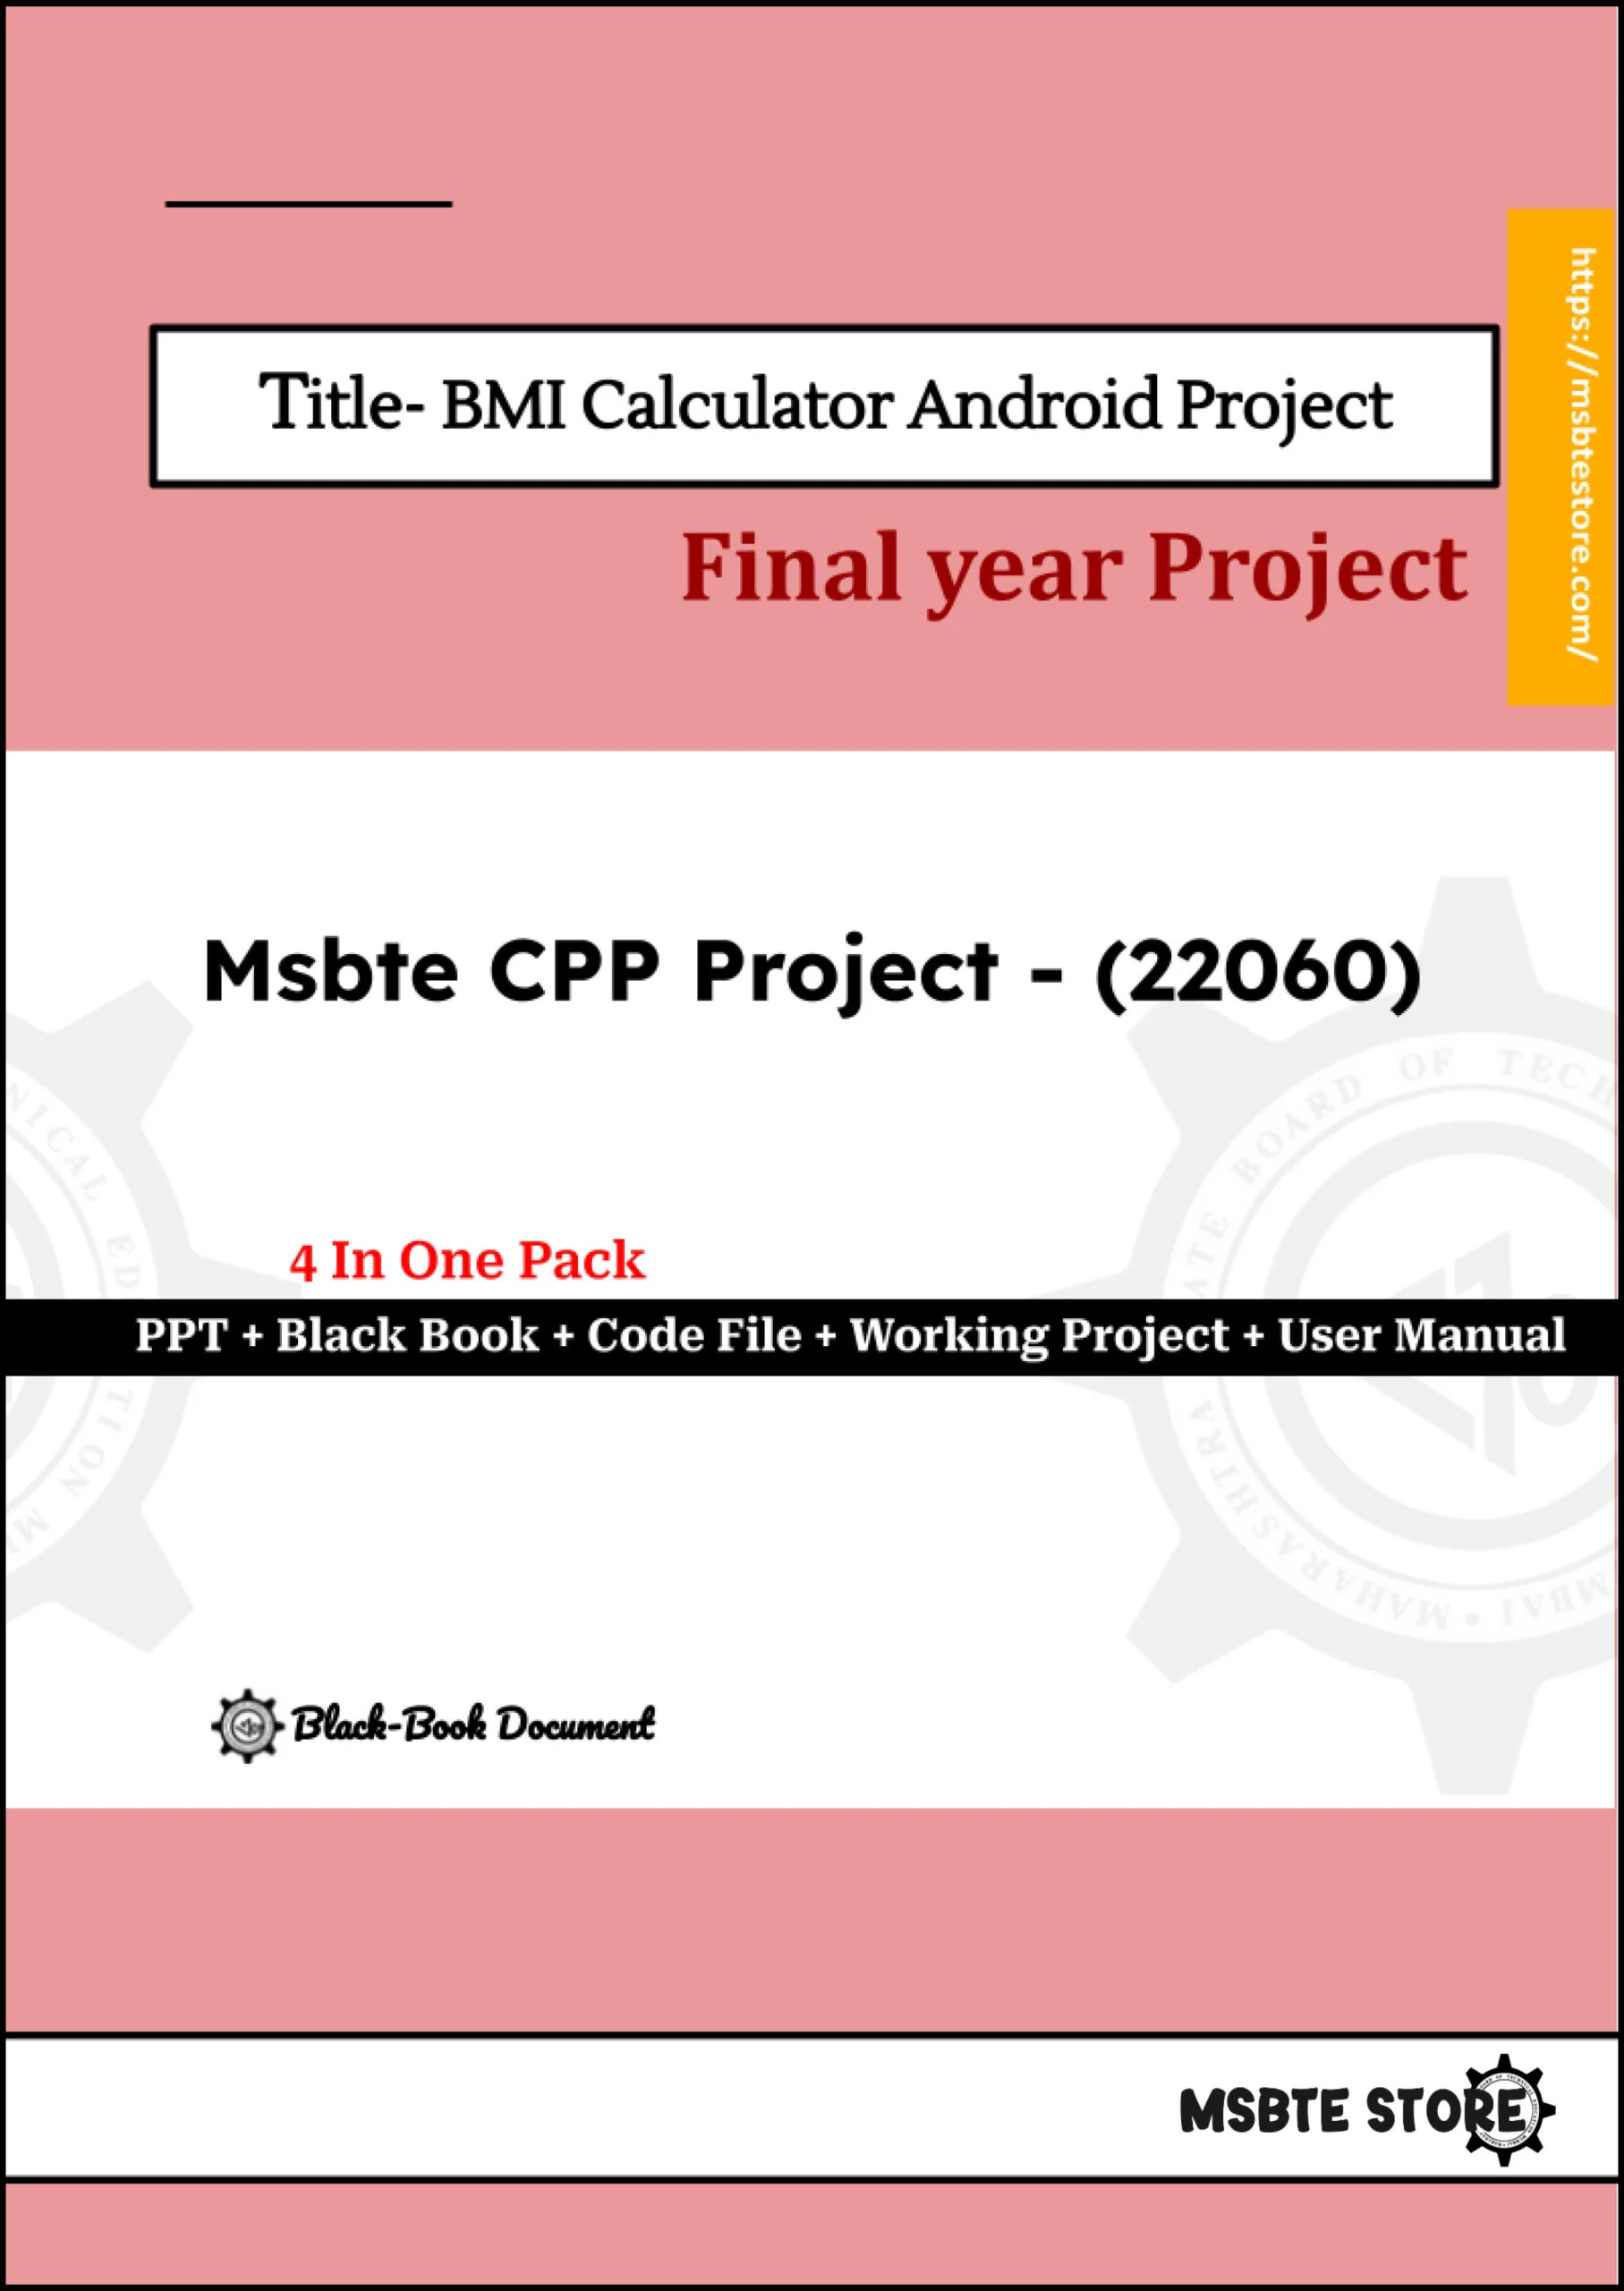 BMI Calculator Android Application